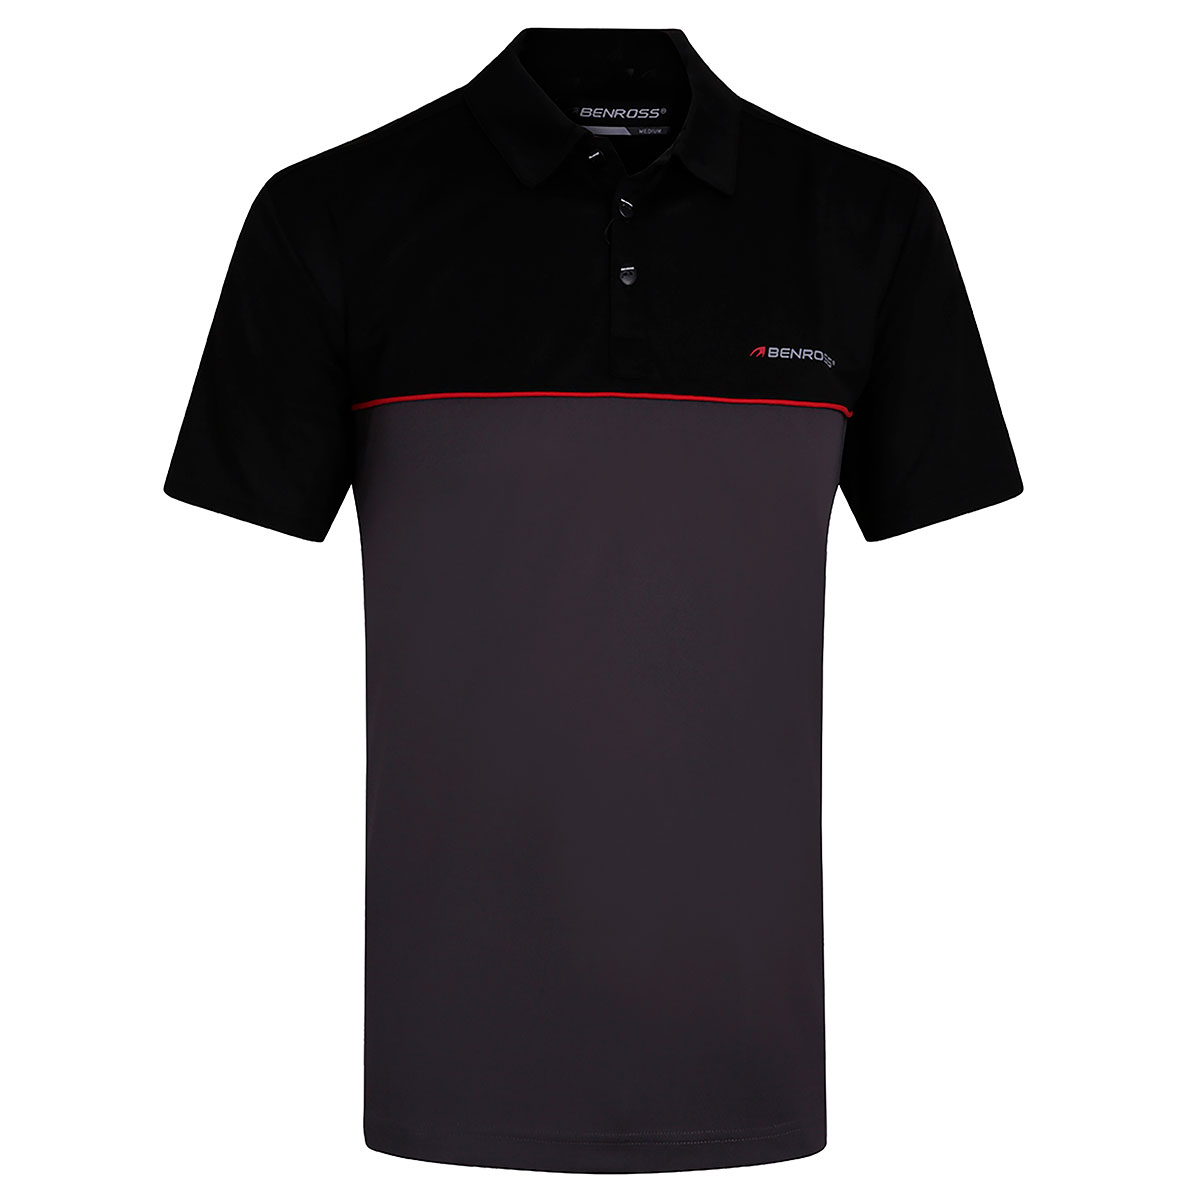 Benross Men's Colour Stretch Golf Polo Shirt from american golf